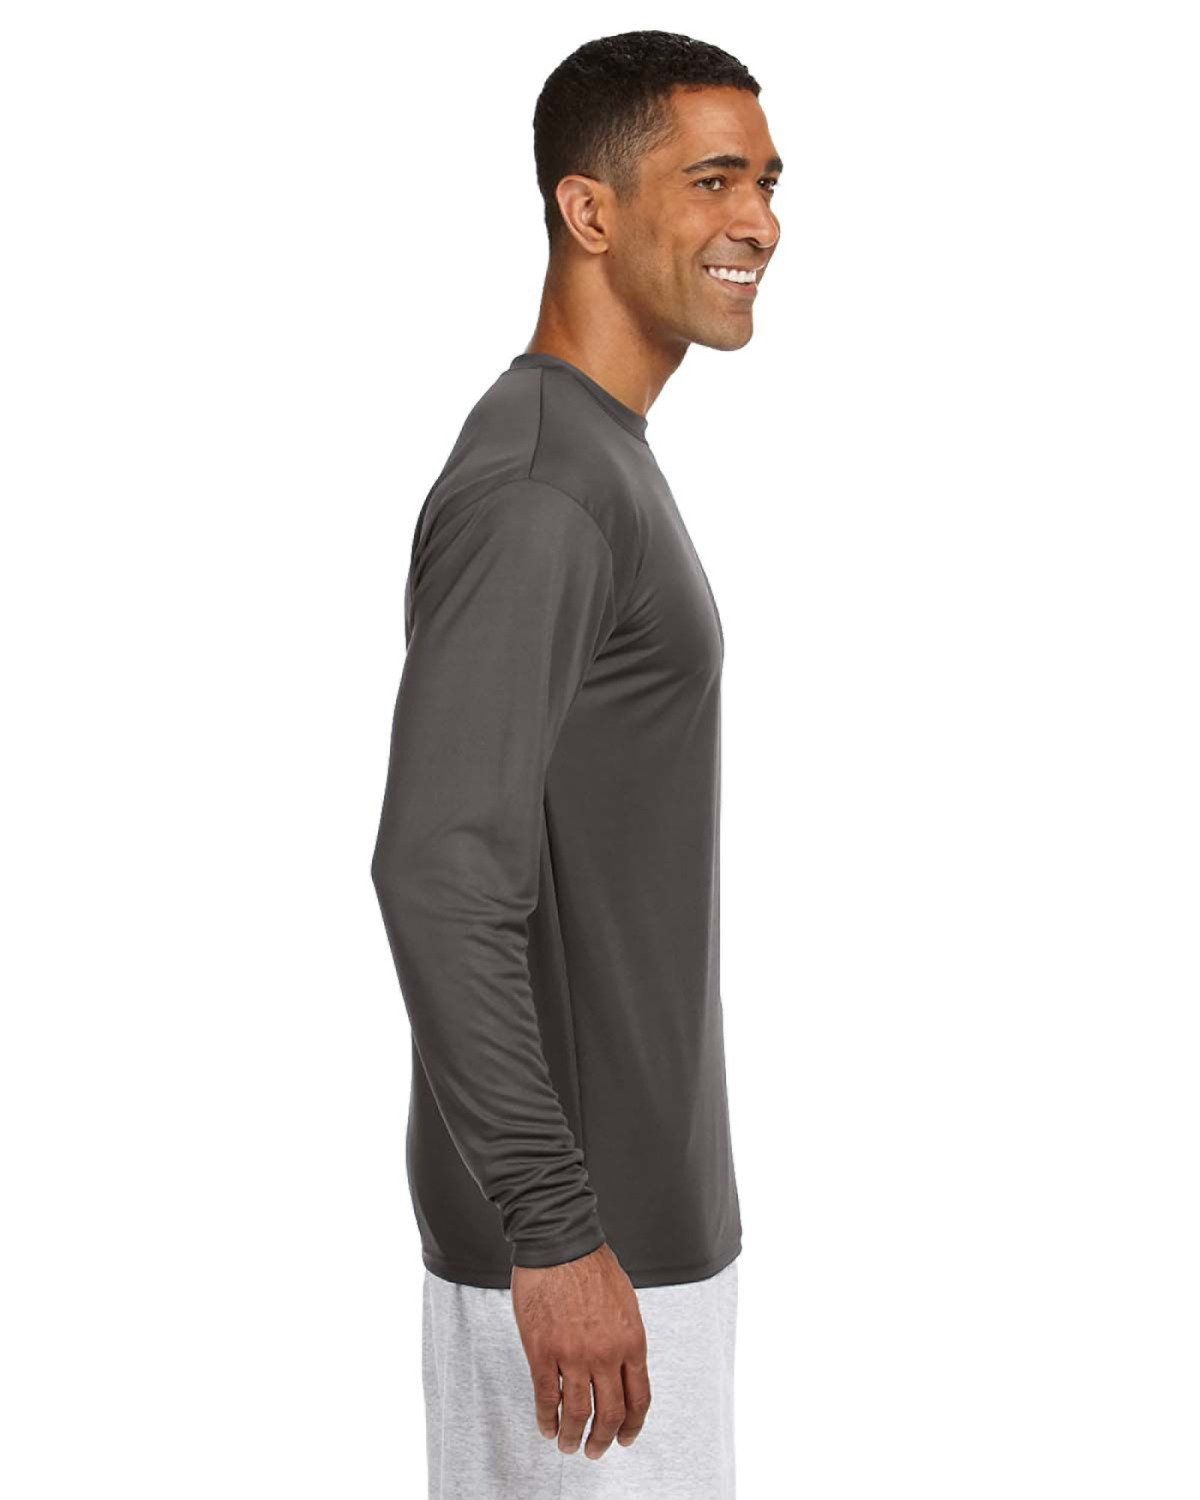 A4 N3165 Men's Cooling Performance Long Sleeve T-Shirt